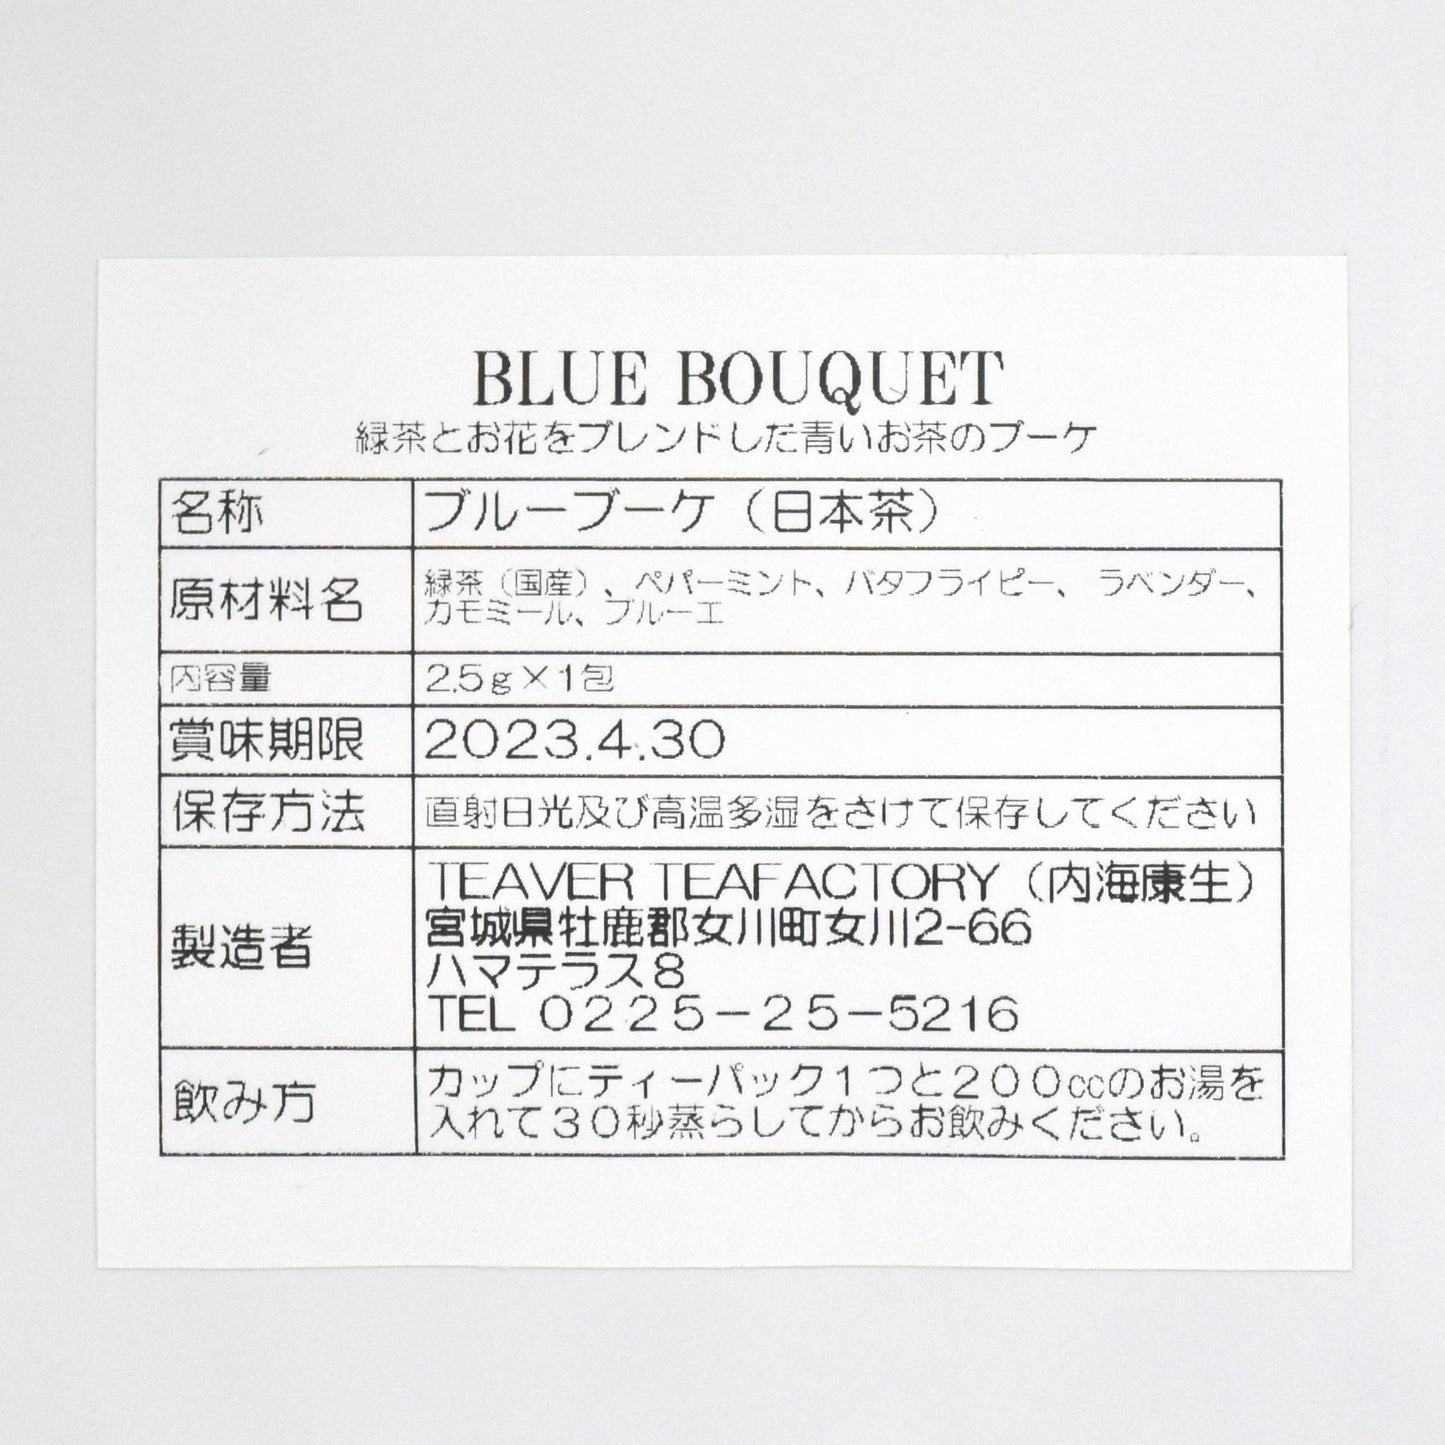 【TEAVER TEAFACTORY】BLUE BOUQUET 青い日本茶